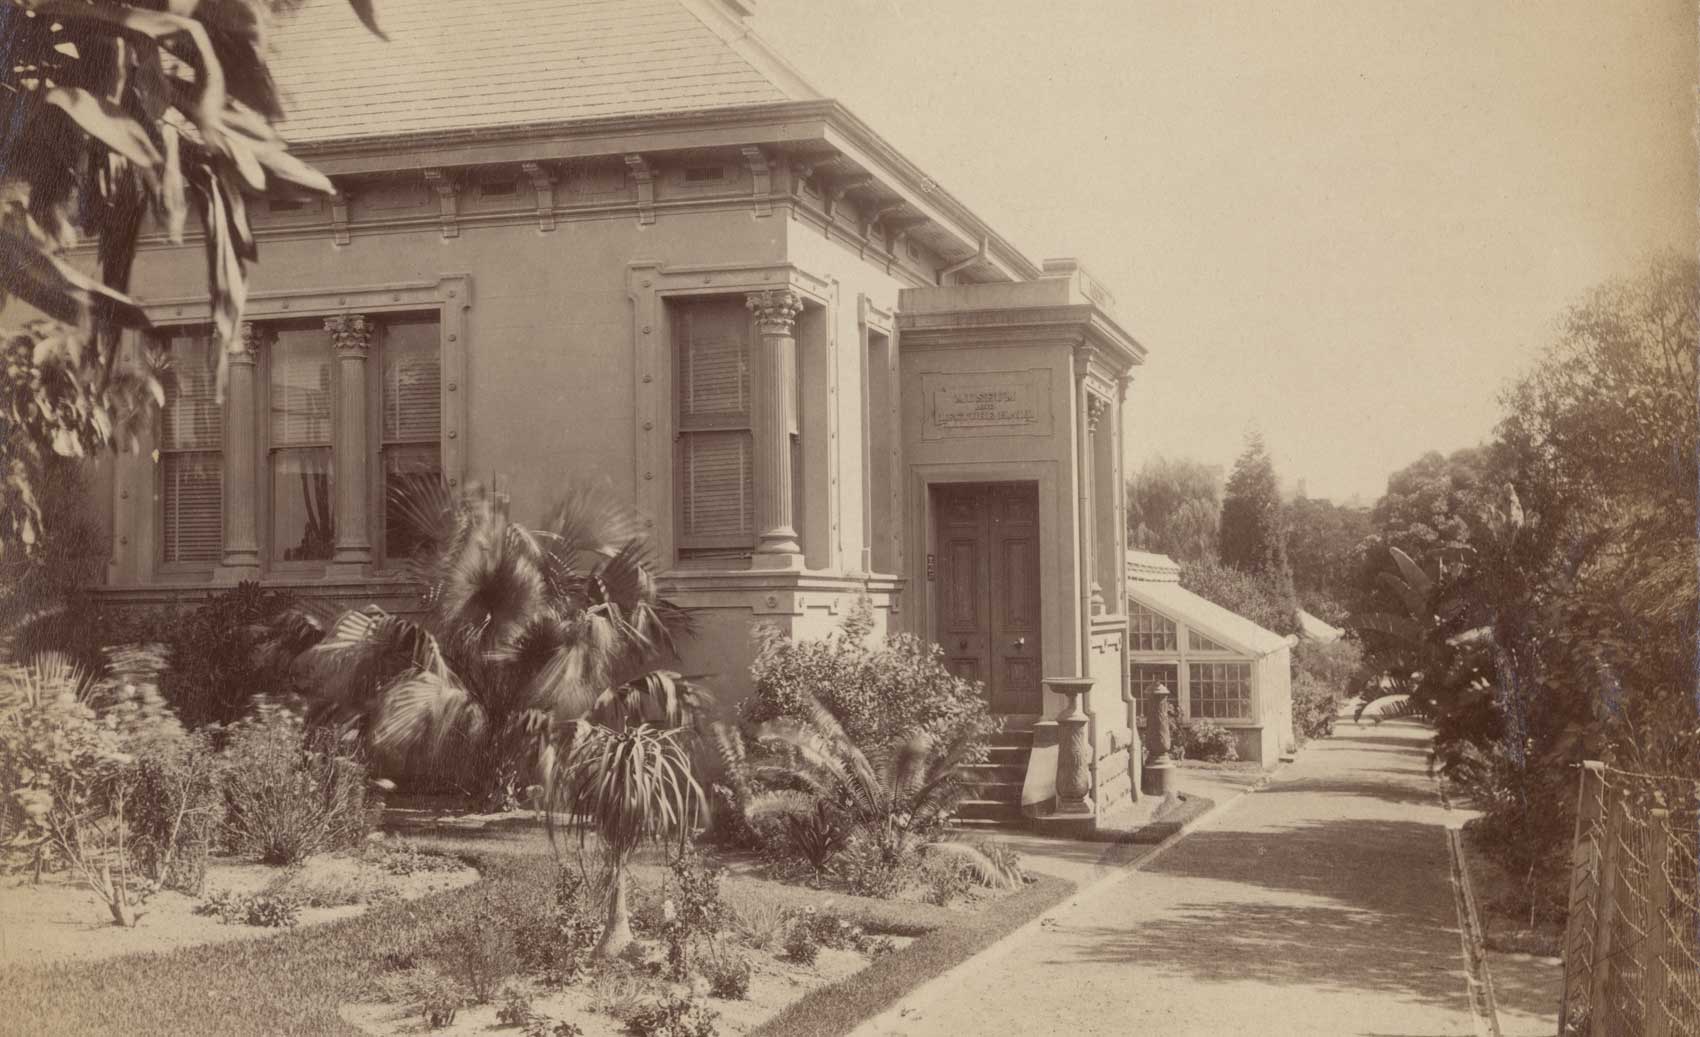 The original location of the National Herbarium of NSW circa 1890